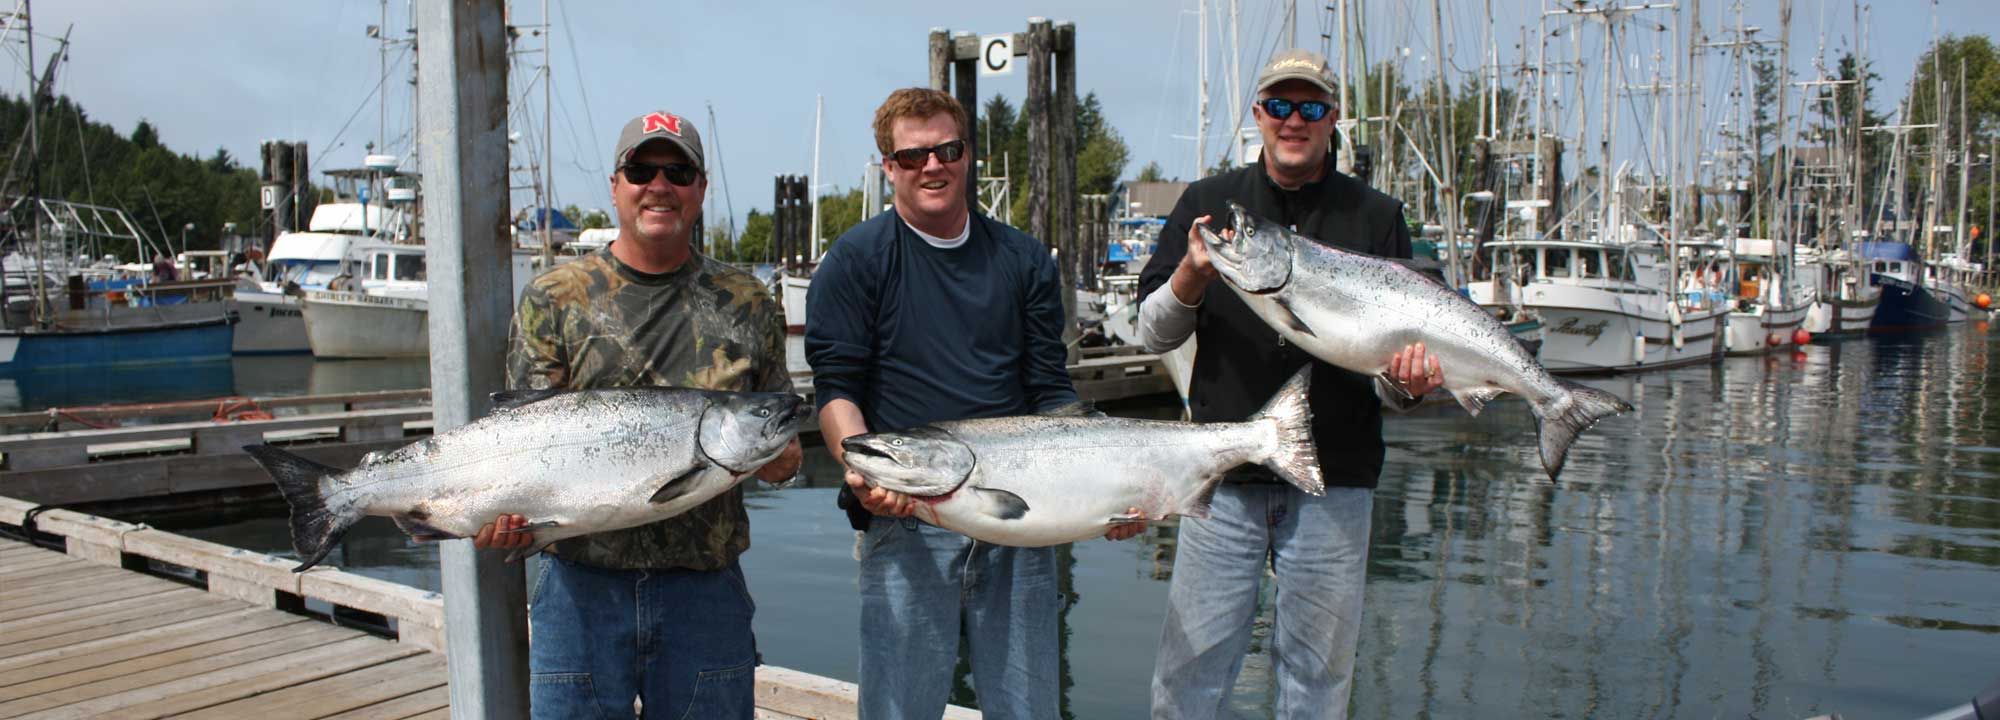 Trolling Reels For Salmon - Go Salmon Fishing